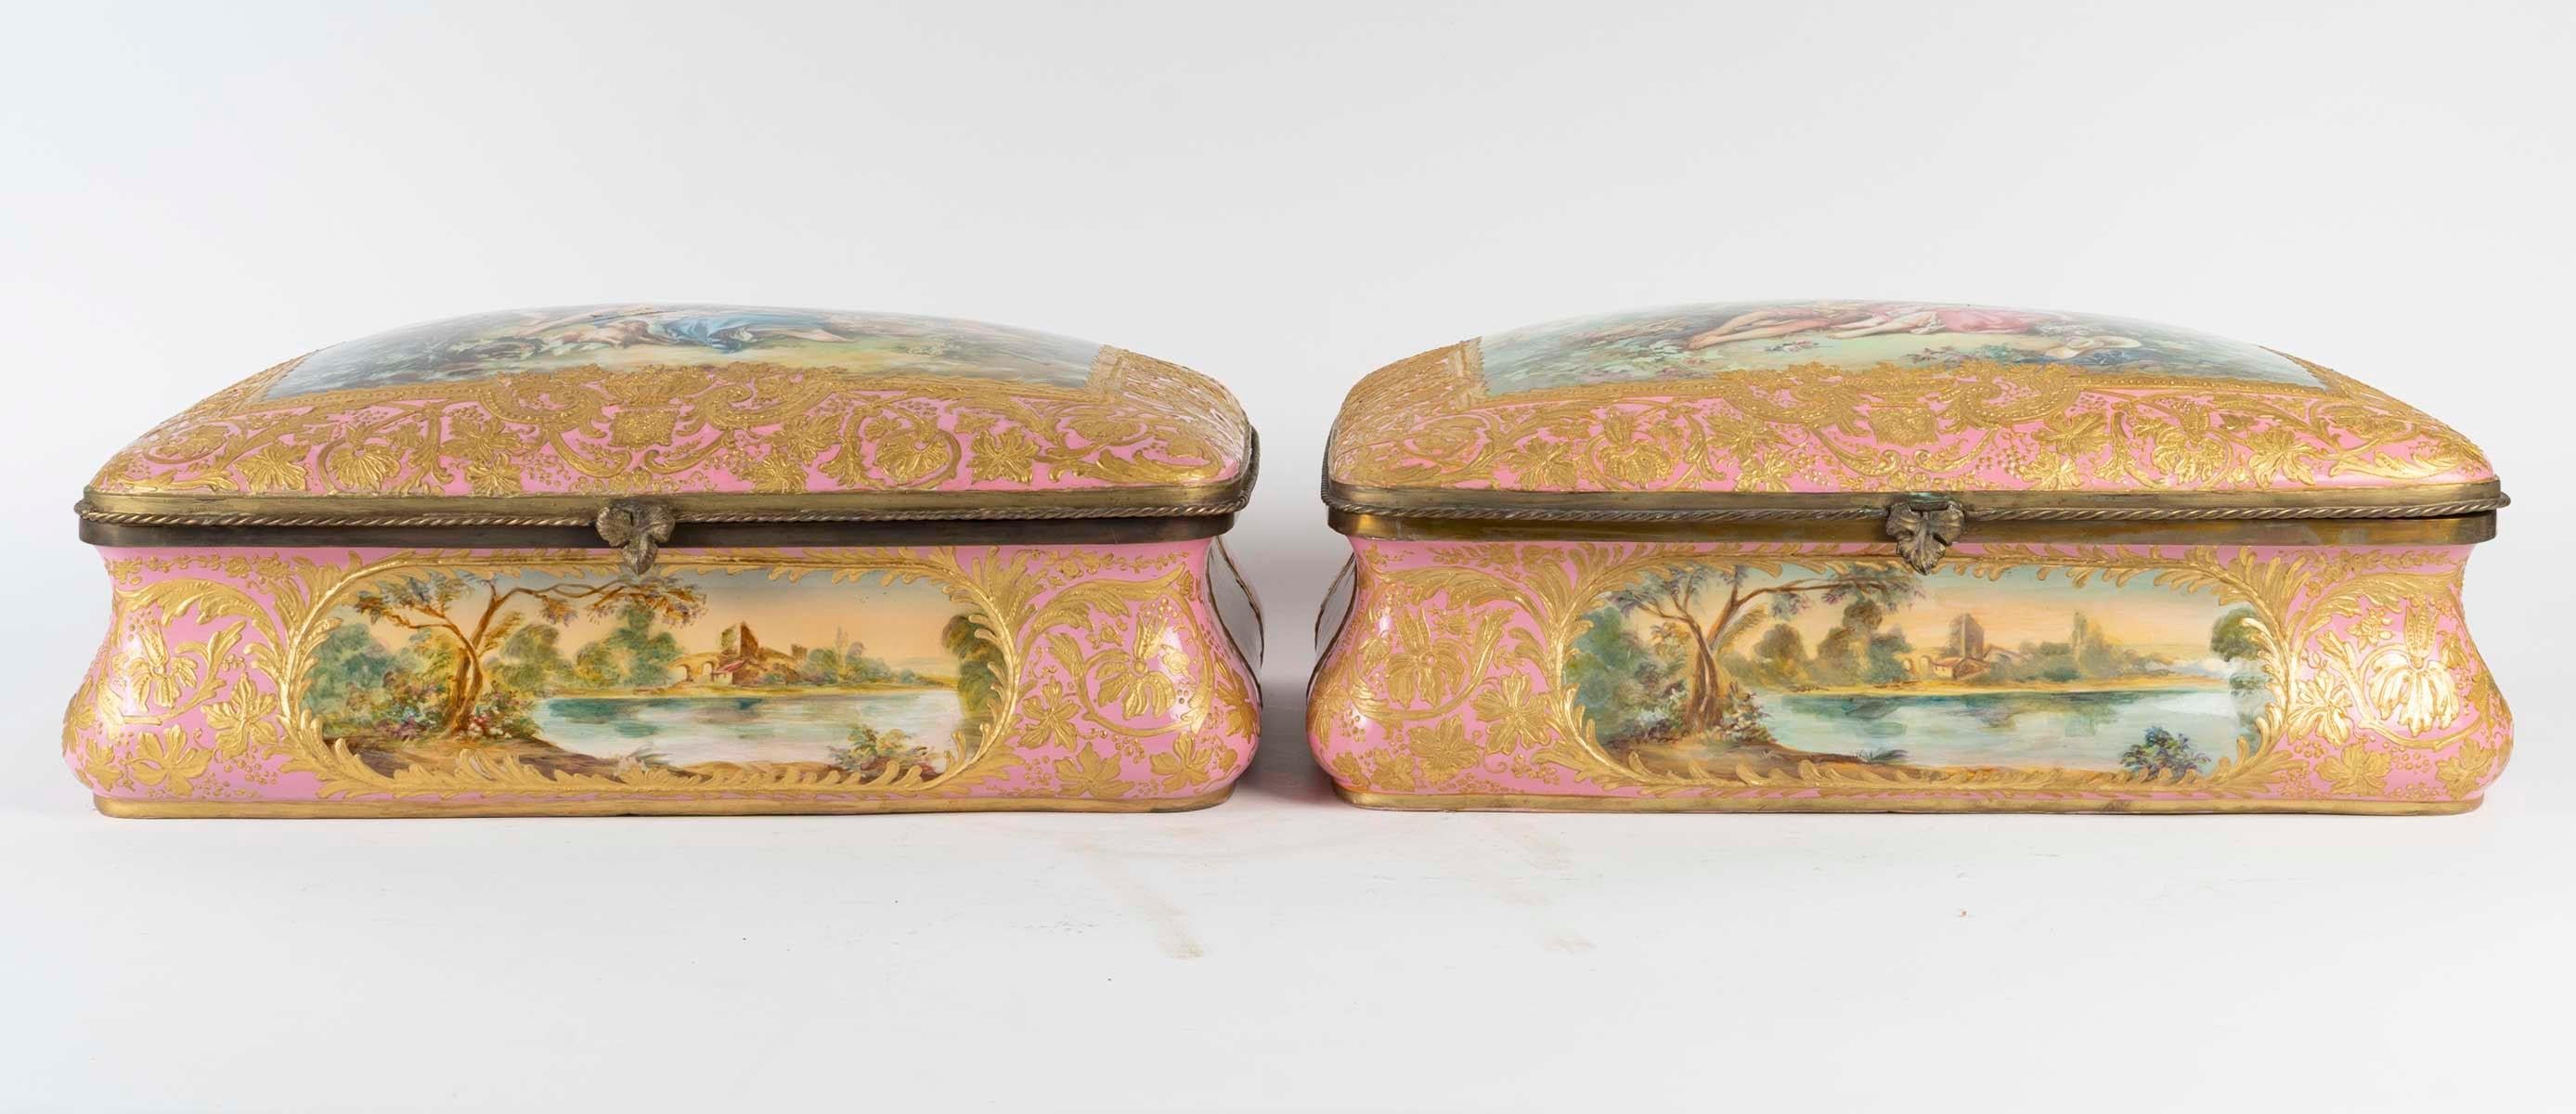 Rare Pair of Sèvres Porcelain Boxes, Brass Mounts, Napoleon III Period. For Sale 4